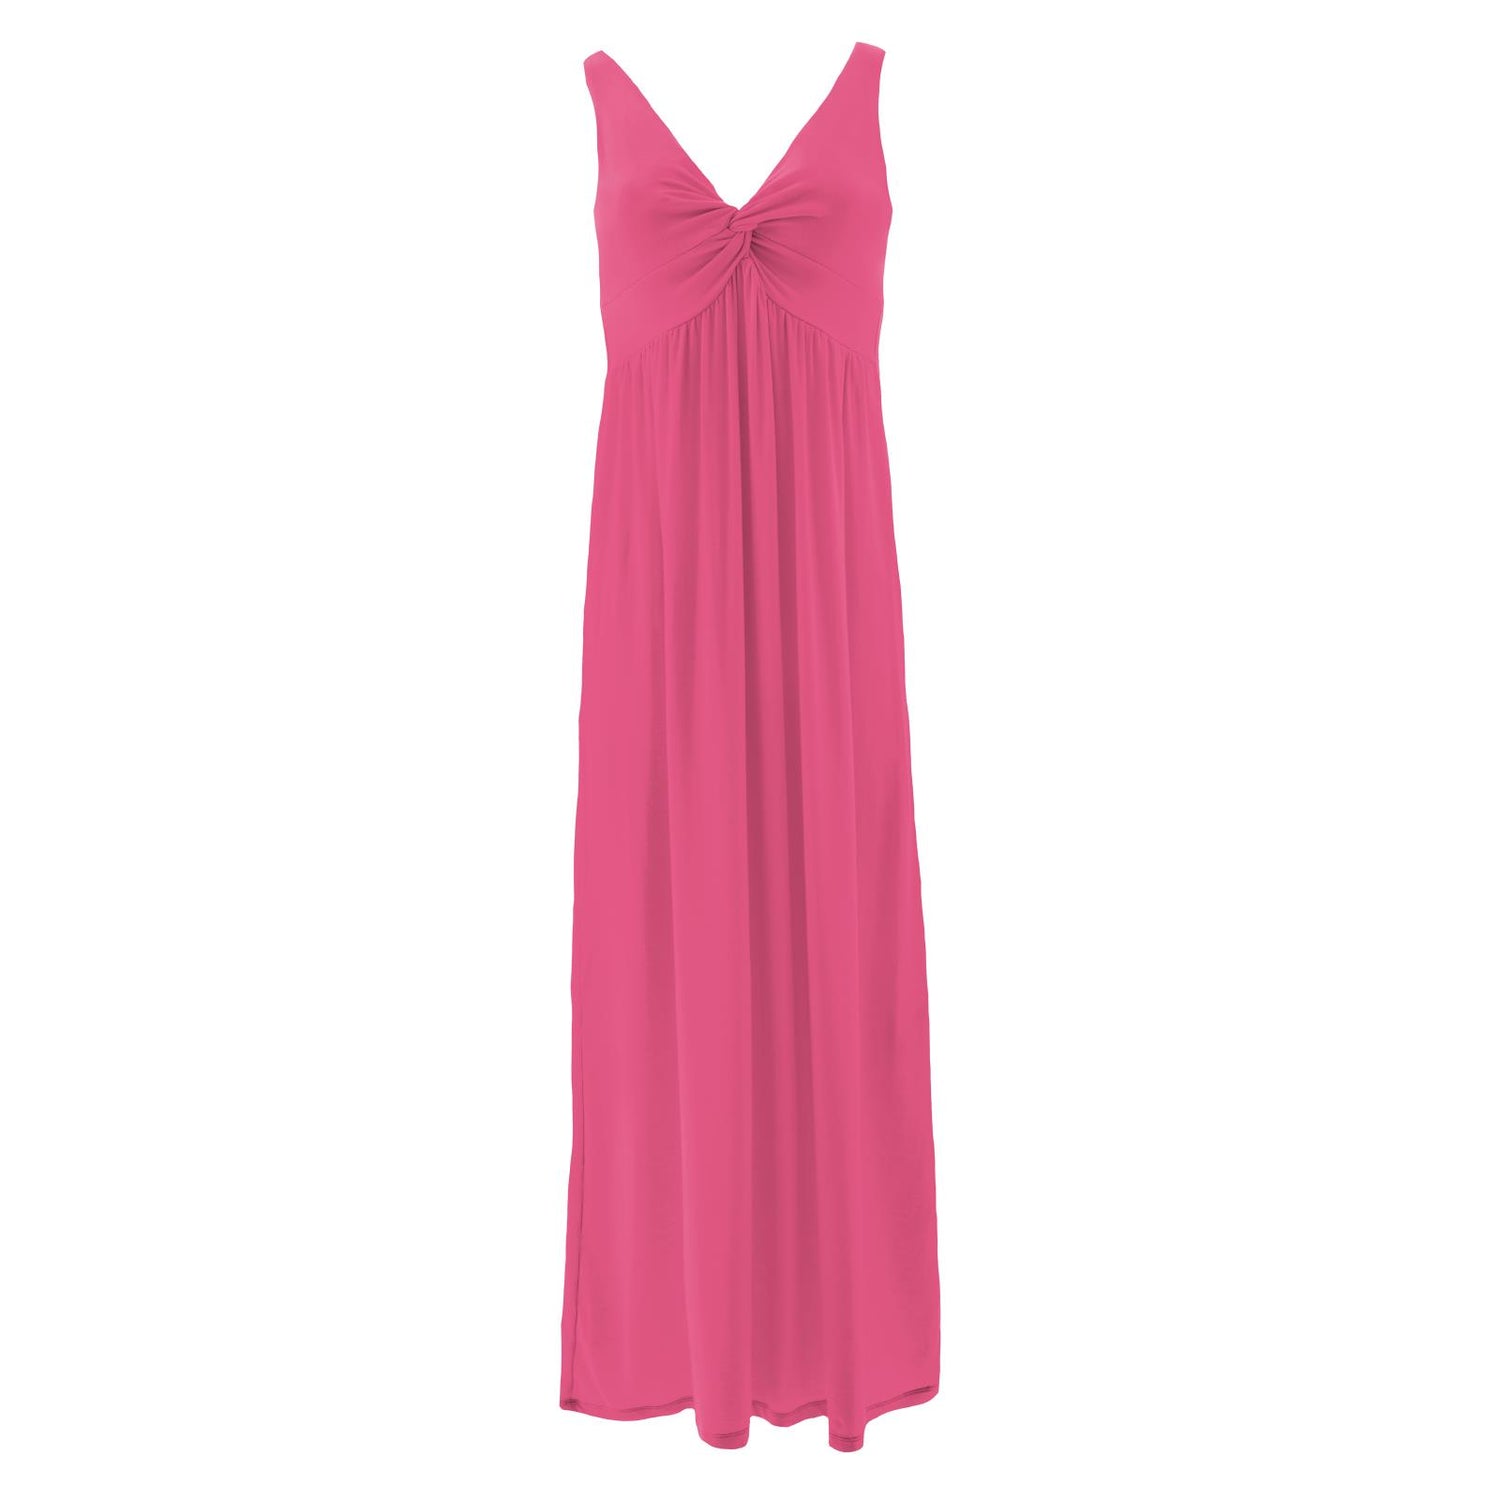 Women's Simple Twist Nightgown in Flamingo